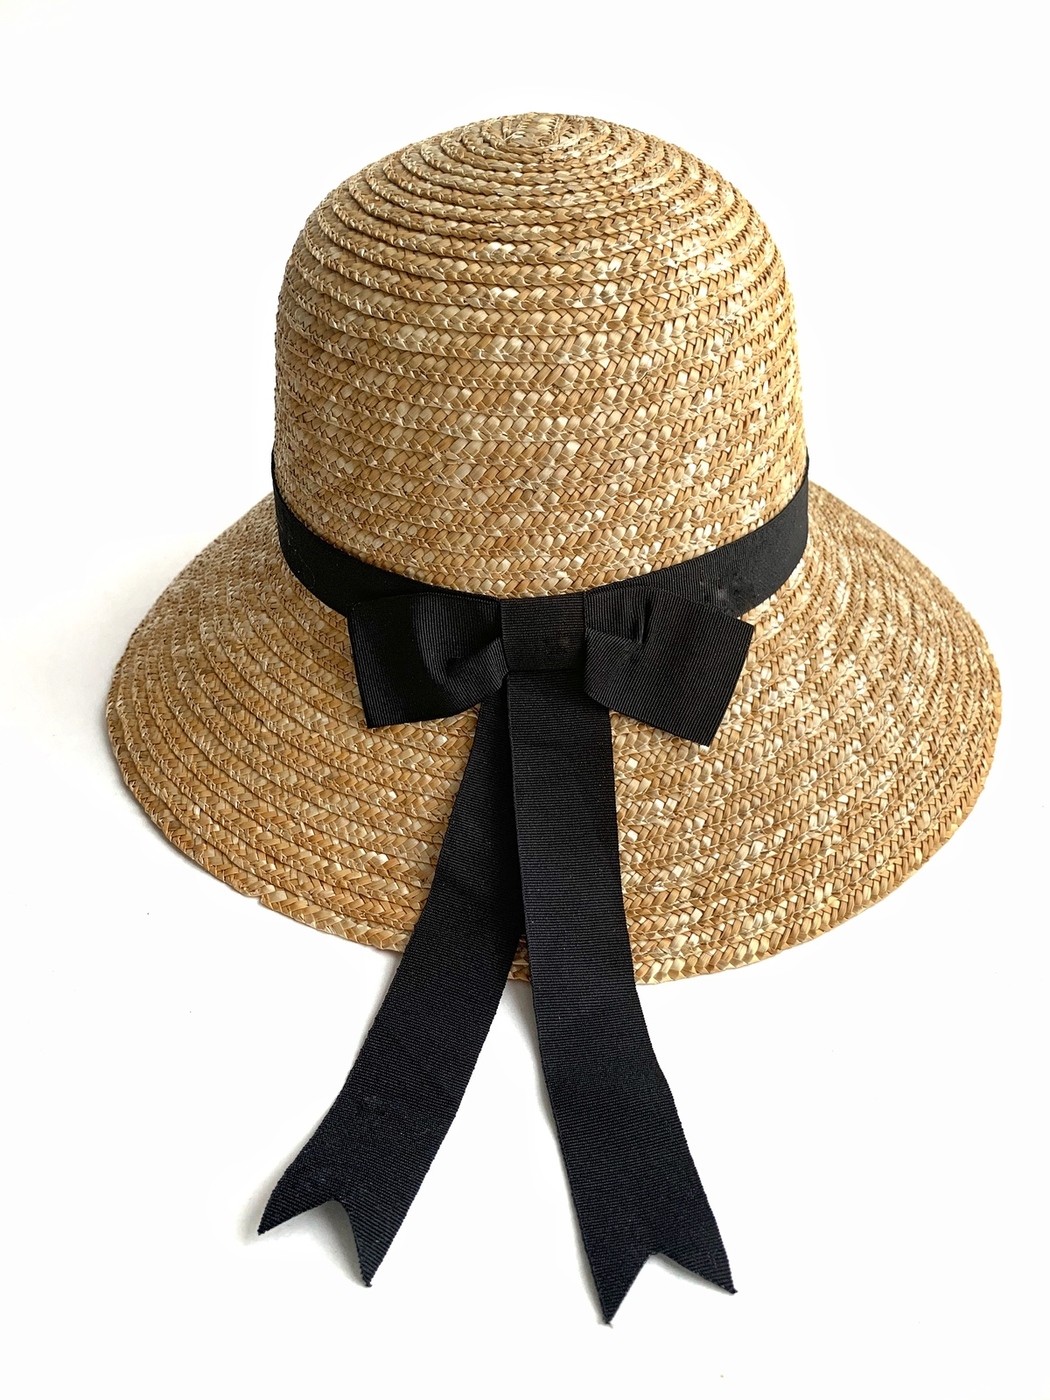 Озон шляпа женская. Классическая шляпа. Шляпа Озон. Соломенные шляпы на Озоне. Соломенная шляпа мужская начала ХХ века.